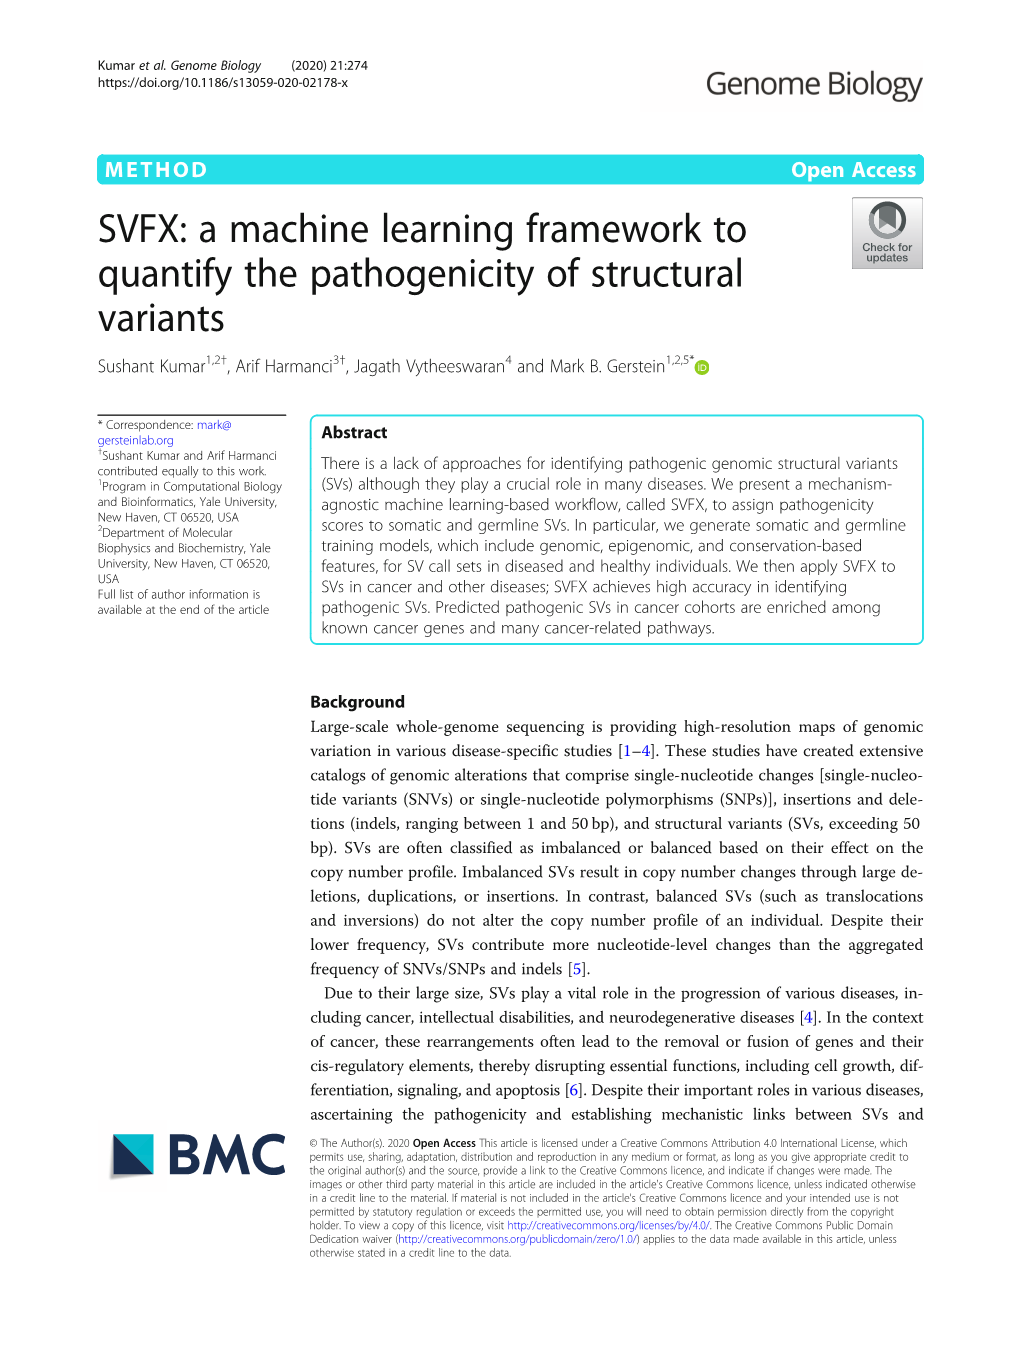 SVFX: a Machine Learning Framework to Quantify the Pathogenicity of Structural Variants Sushant Kumar1,2†, Arif Harmanci3†, Jagath Vytheeswaran4 and Mark B